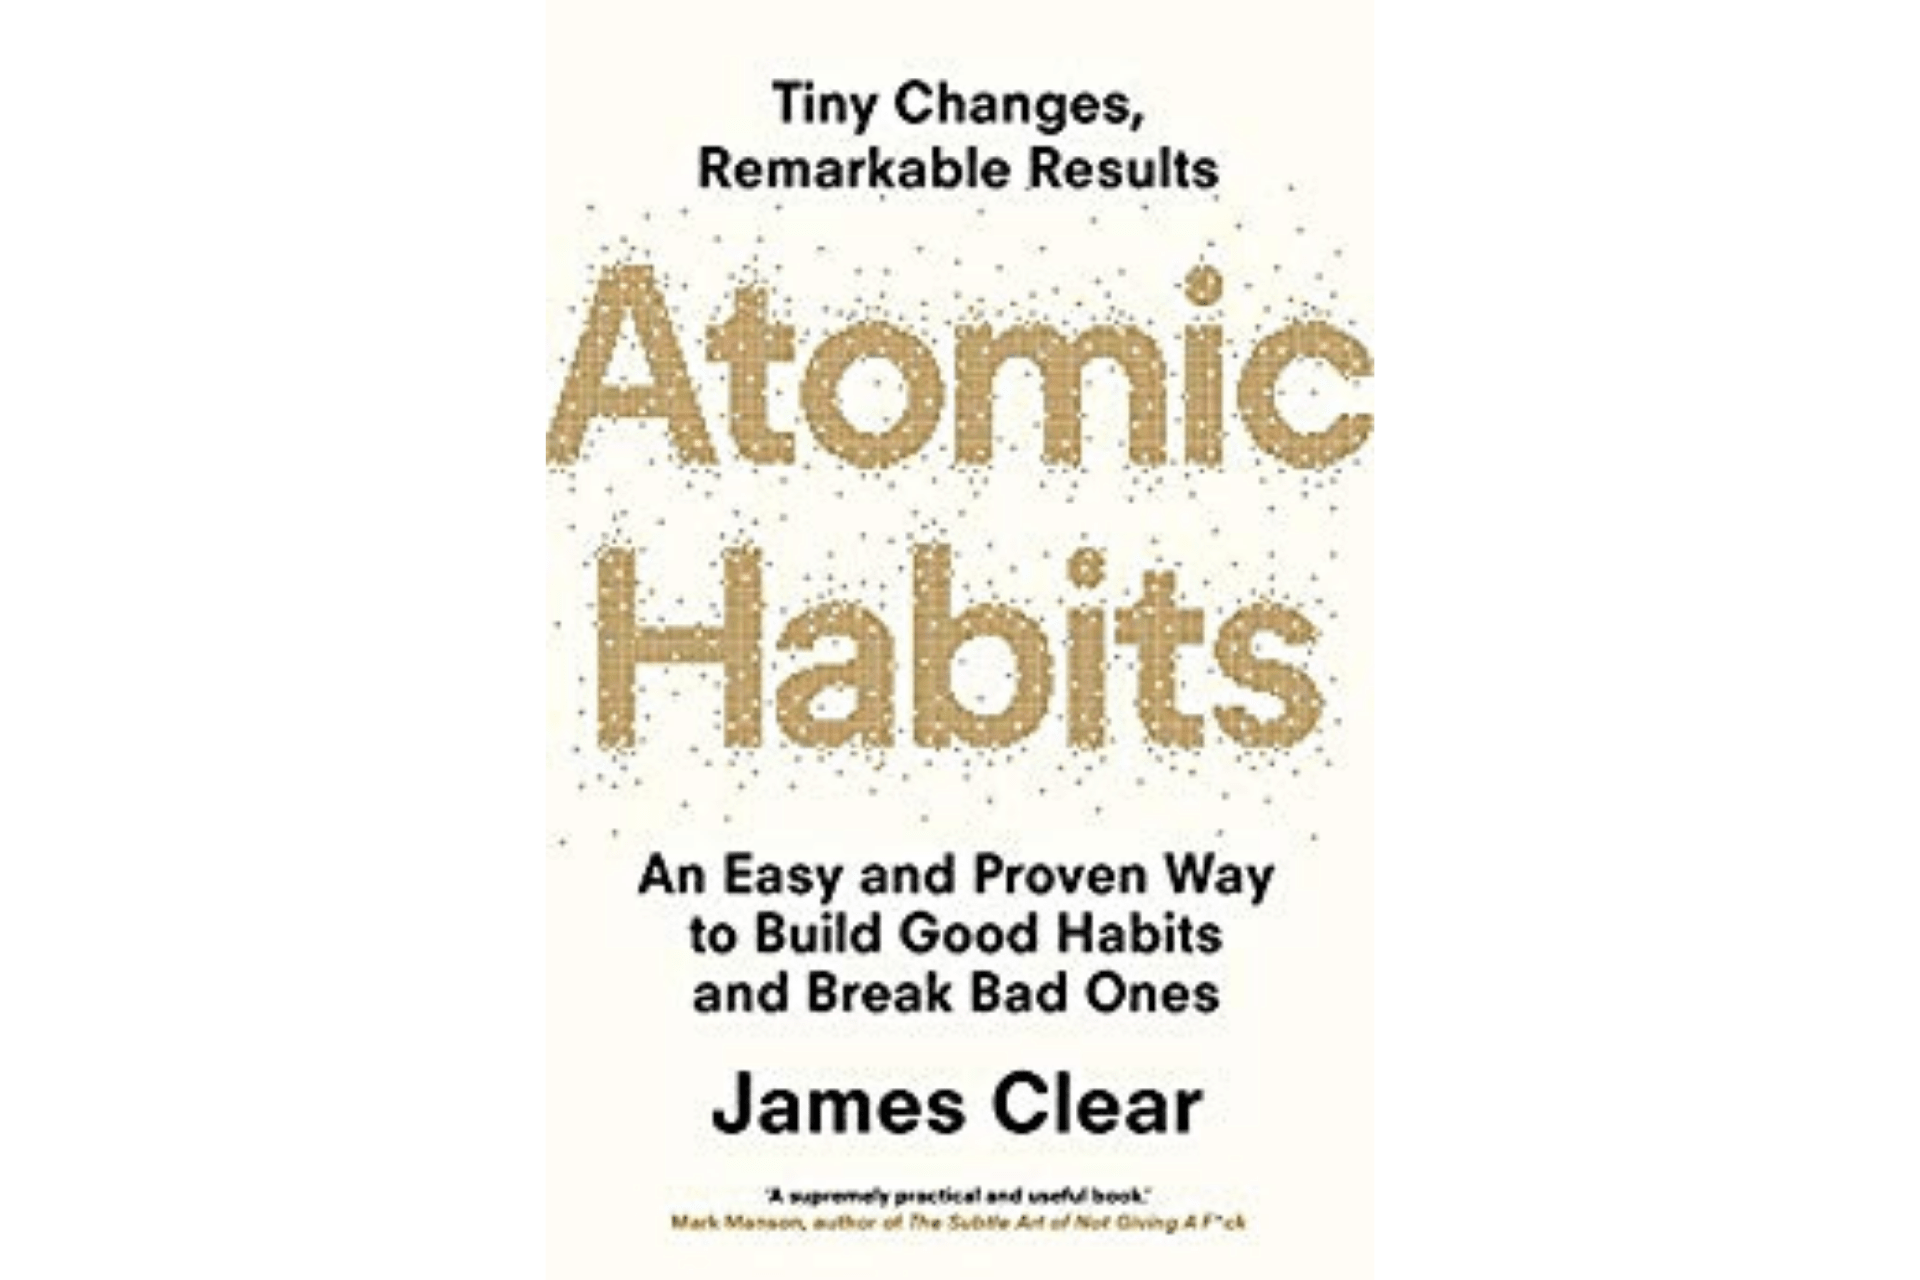 Atomic habits mp3 download openssh download